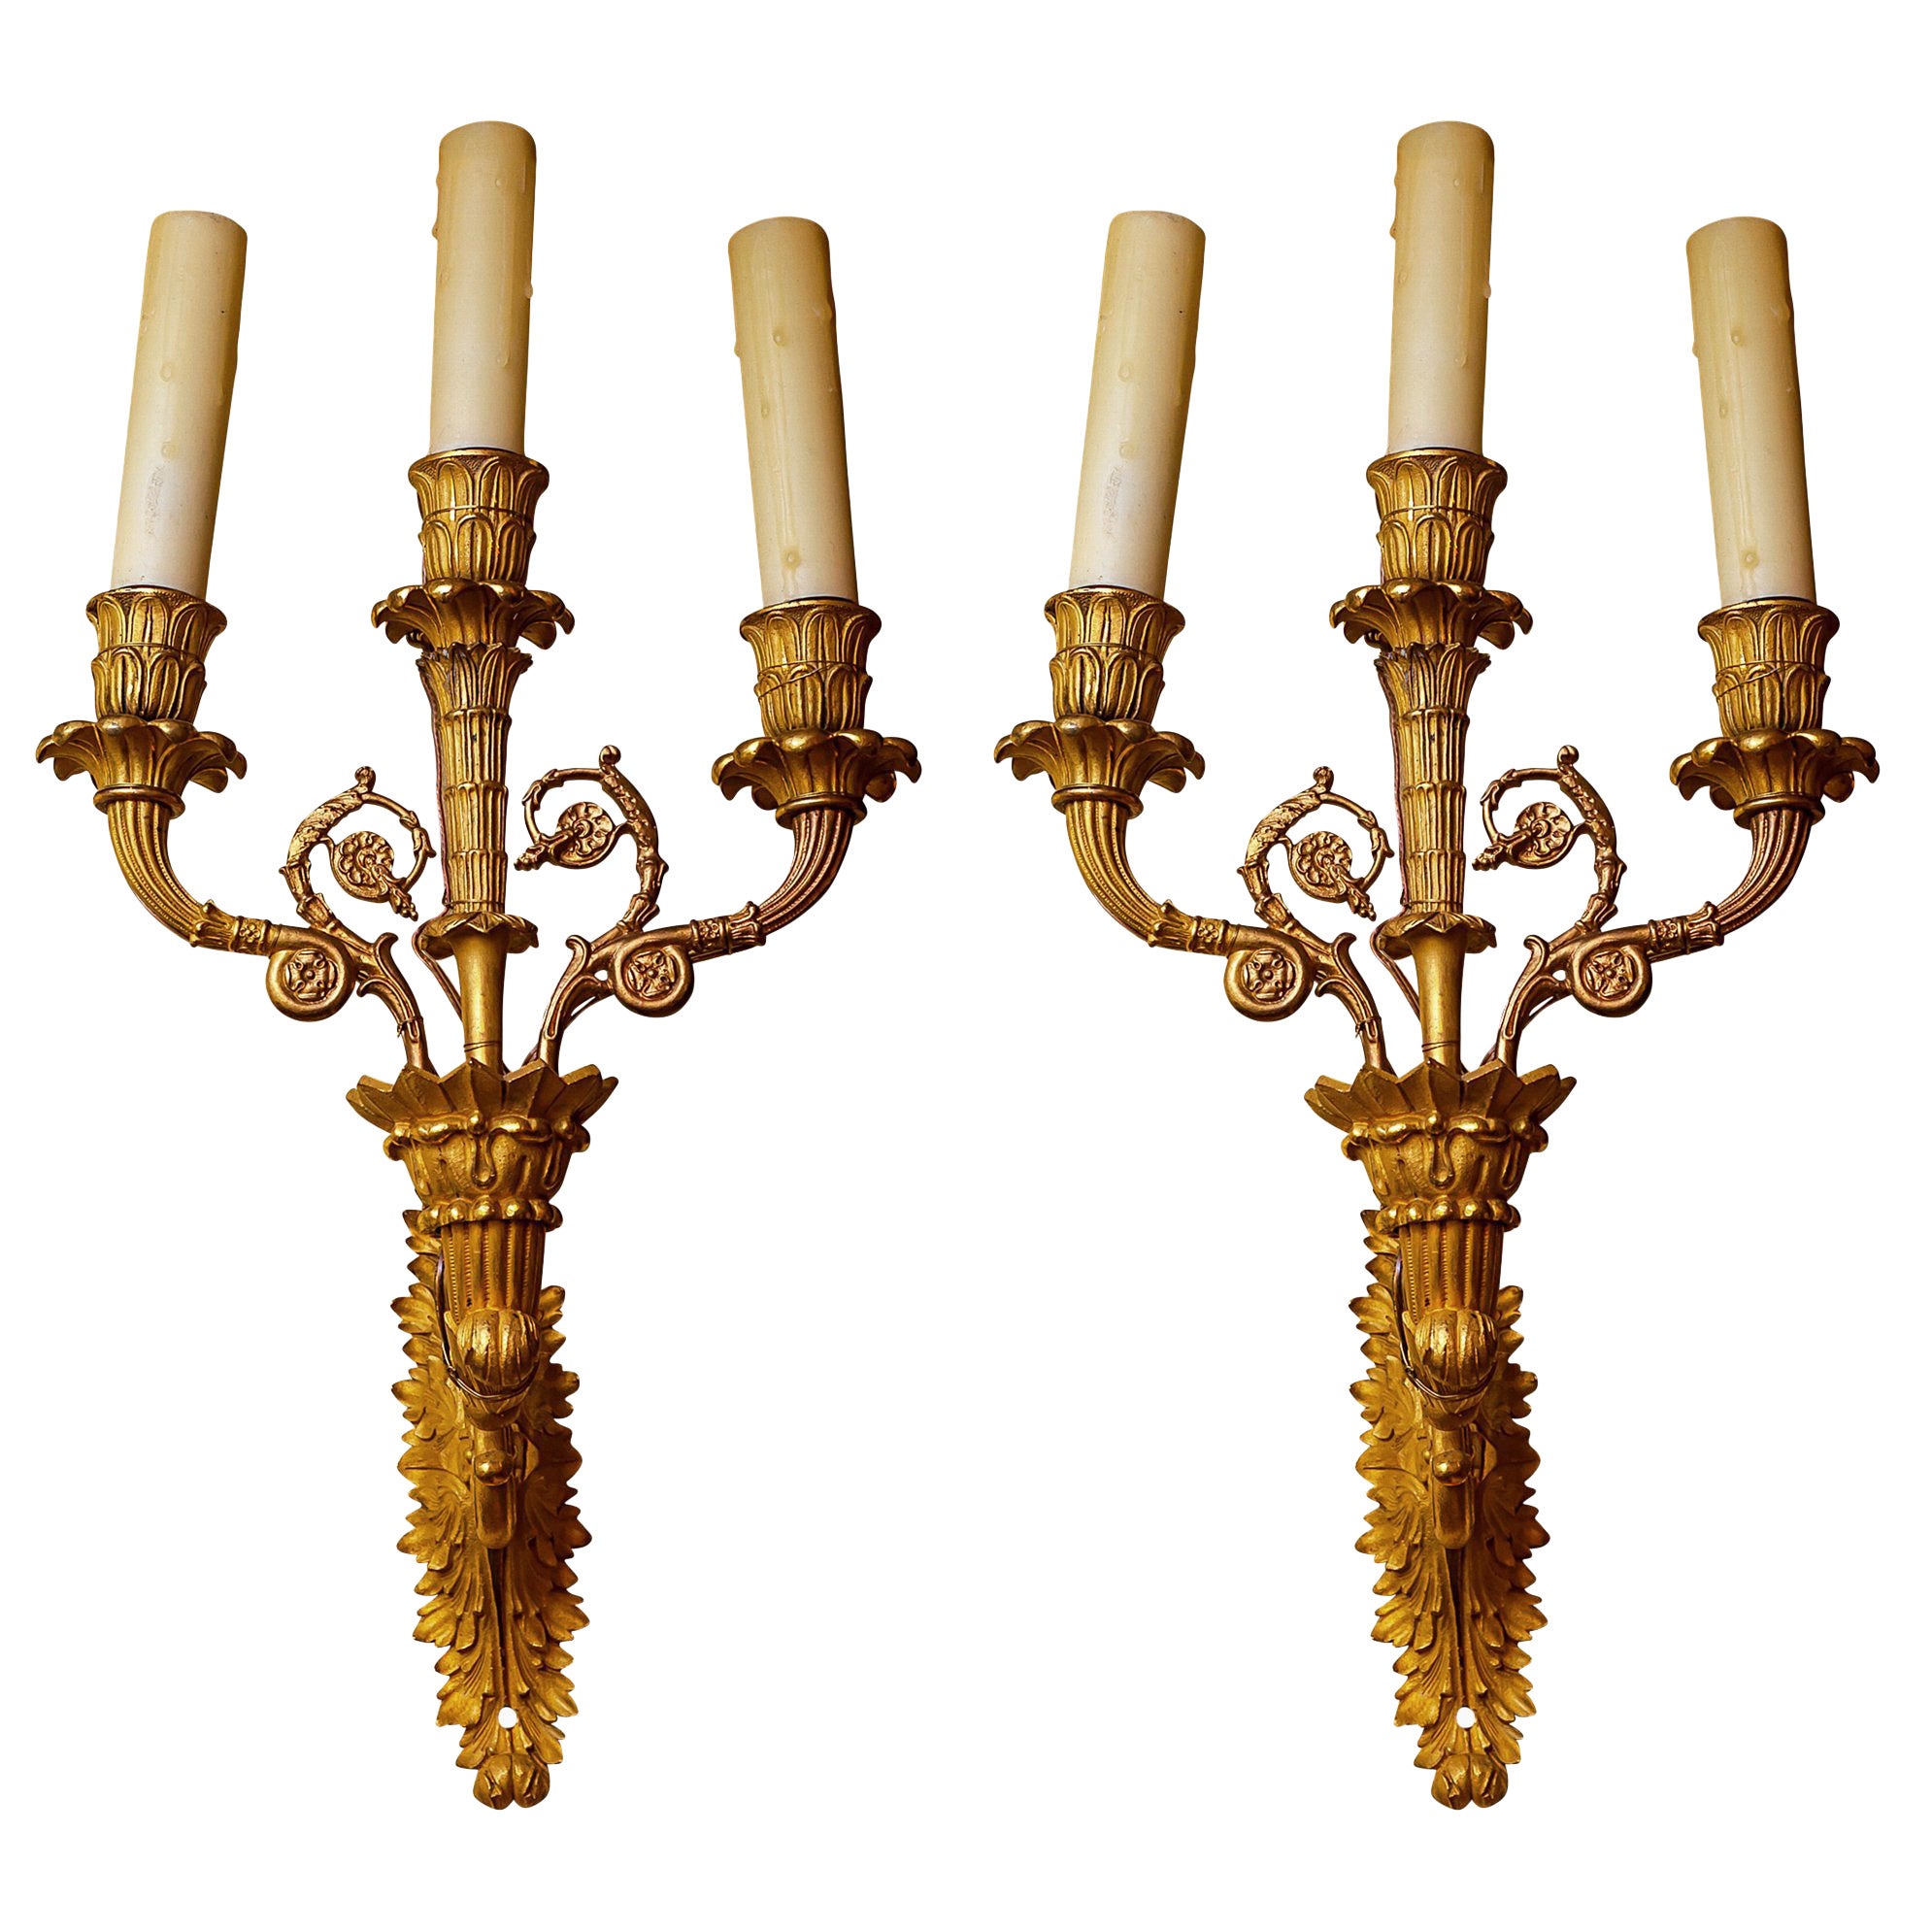 Pair of Emire Style Gilt Bronze Three-Arm Wall Light Sconces